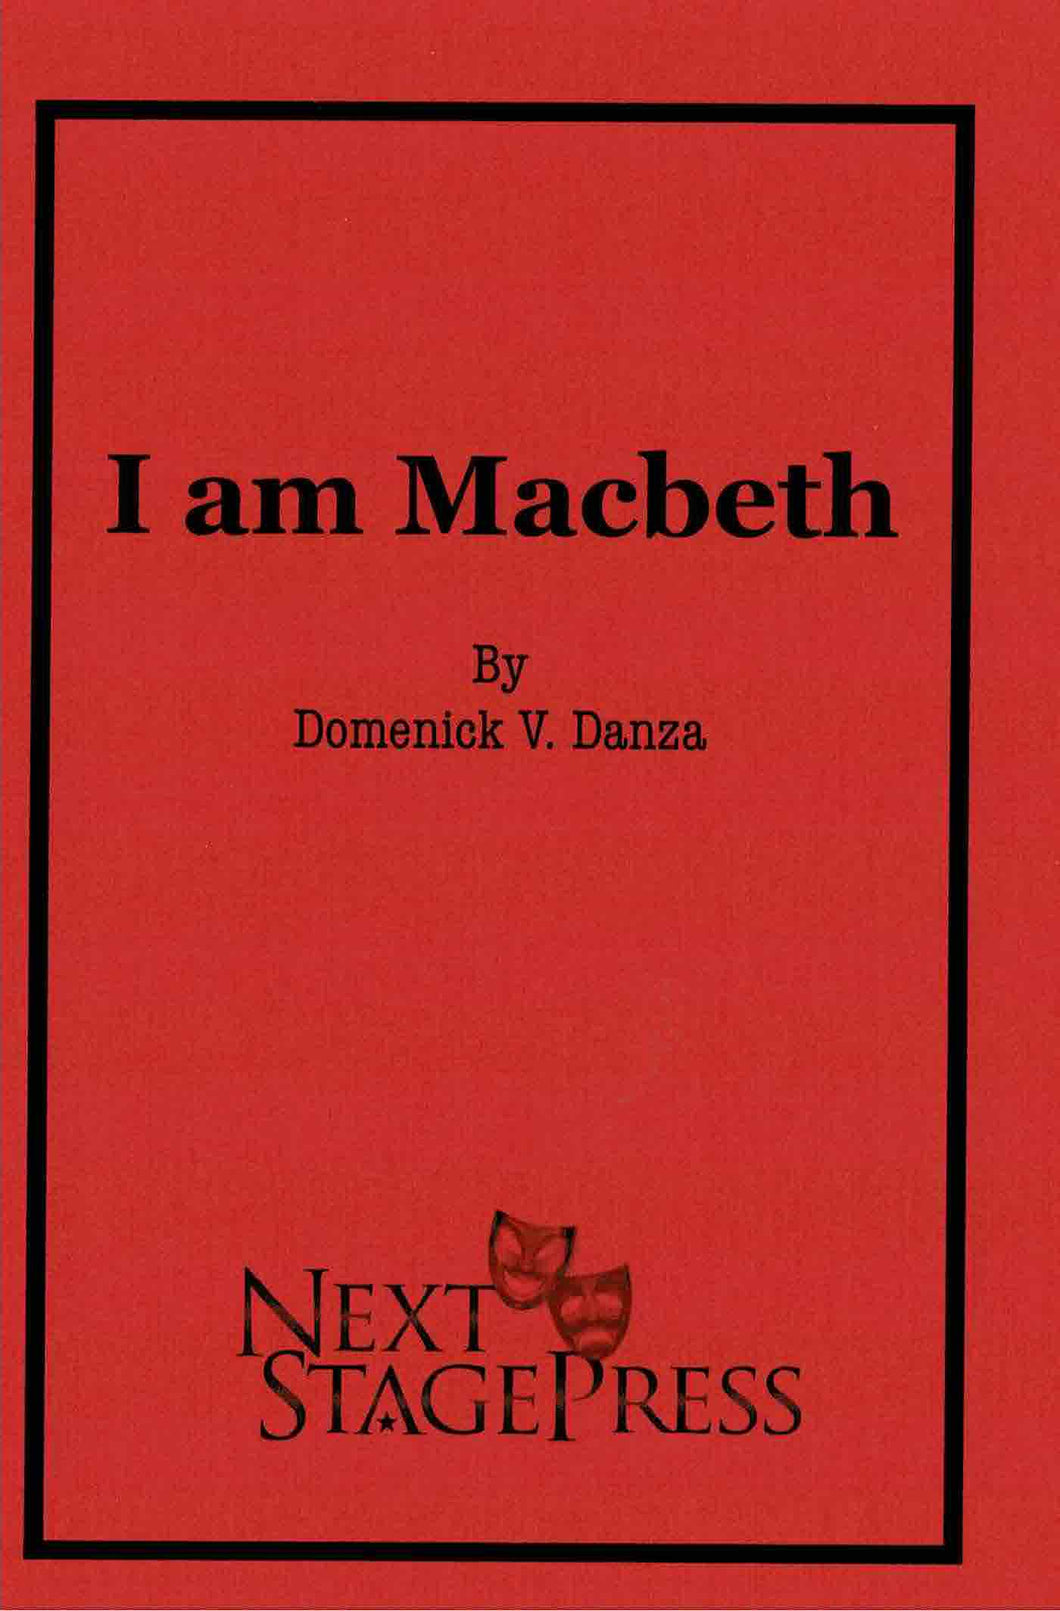 I AM MACBETH by Domenick V. Danza